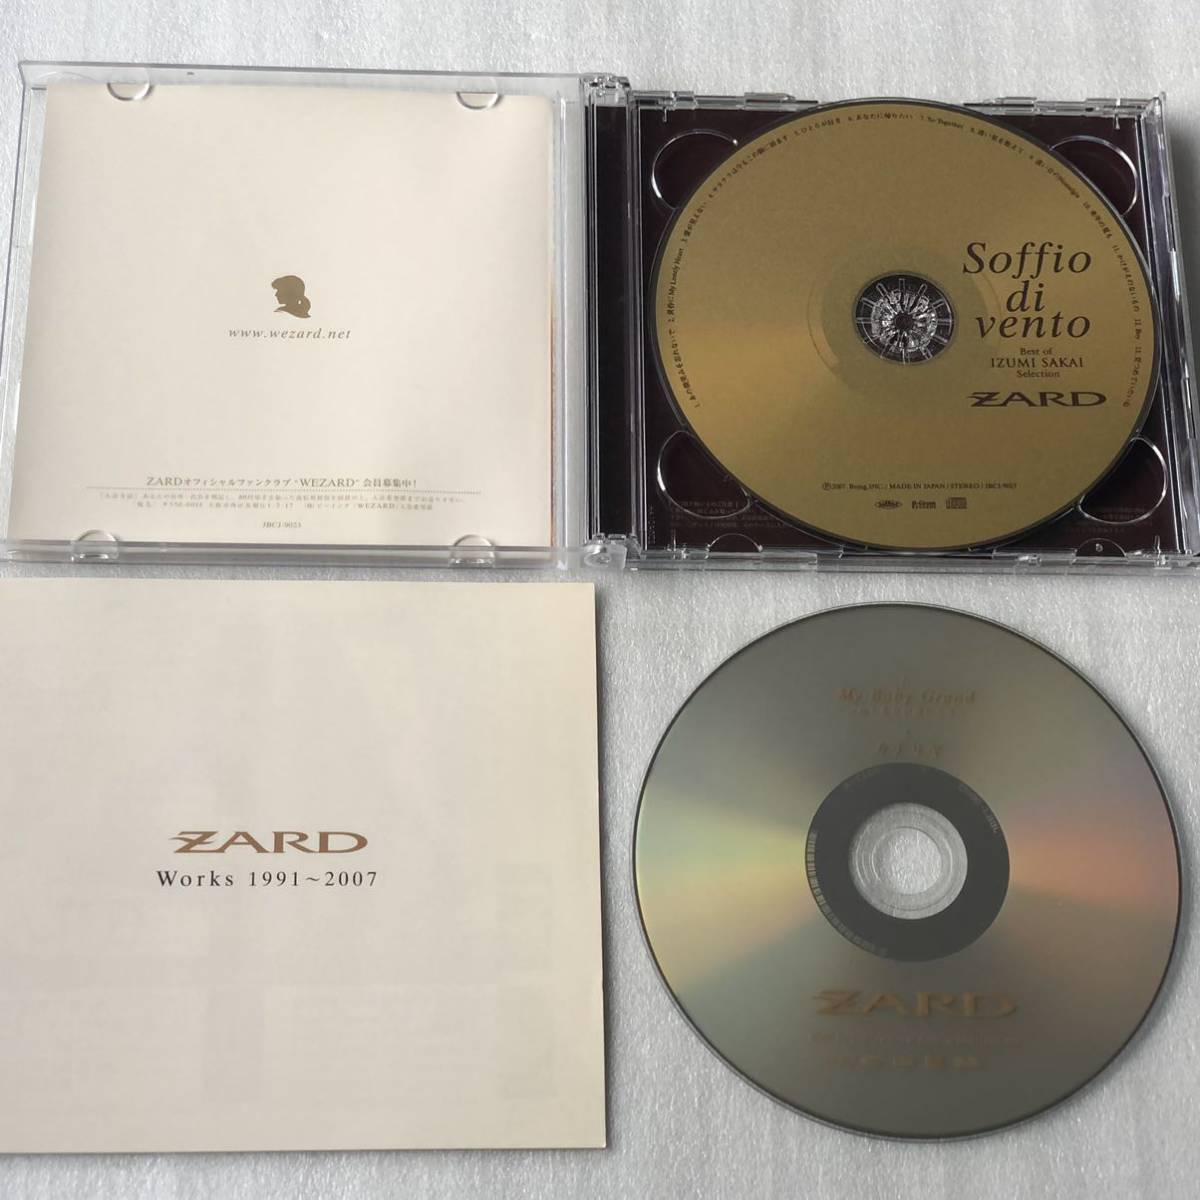 中古CD ZARD/Soffio di vento Best of IZUMI SAKAI Selection (CD+DVD) (2007年)_画像3